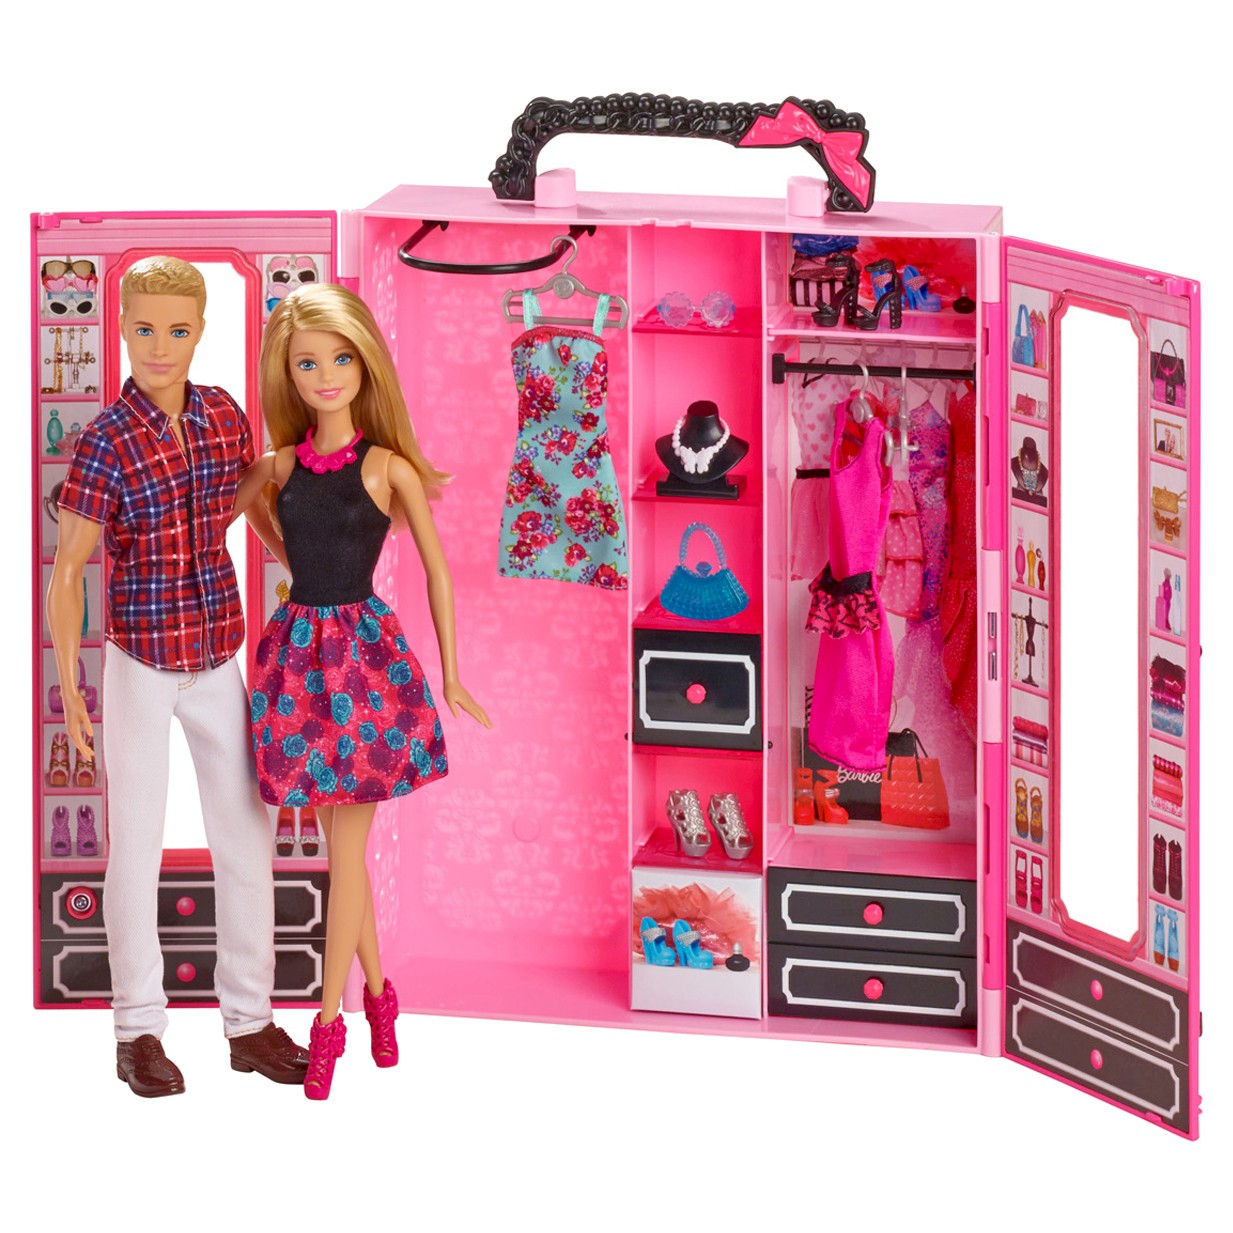 Большой набор кукол. Шкаф для кукол Барби на вайлдберриз. Кукла Барби с гардеробом. Кукла Барби , Кен и их гардероб. Игровой набор Барби Кен кабриолет гардероб.